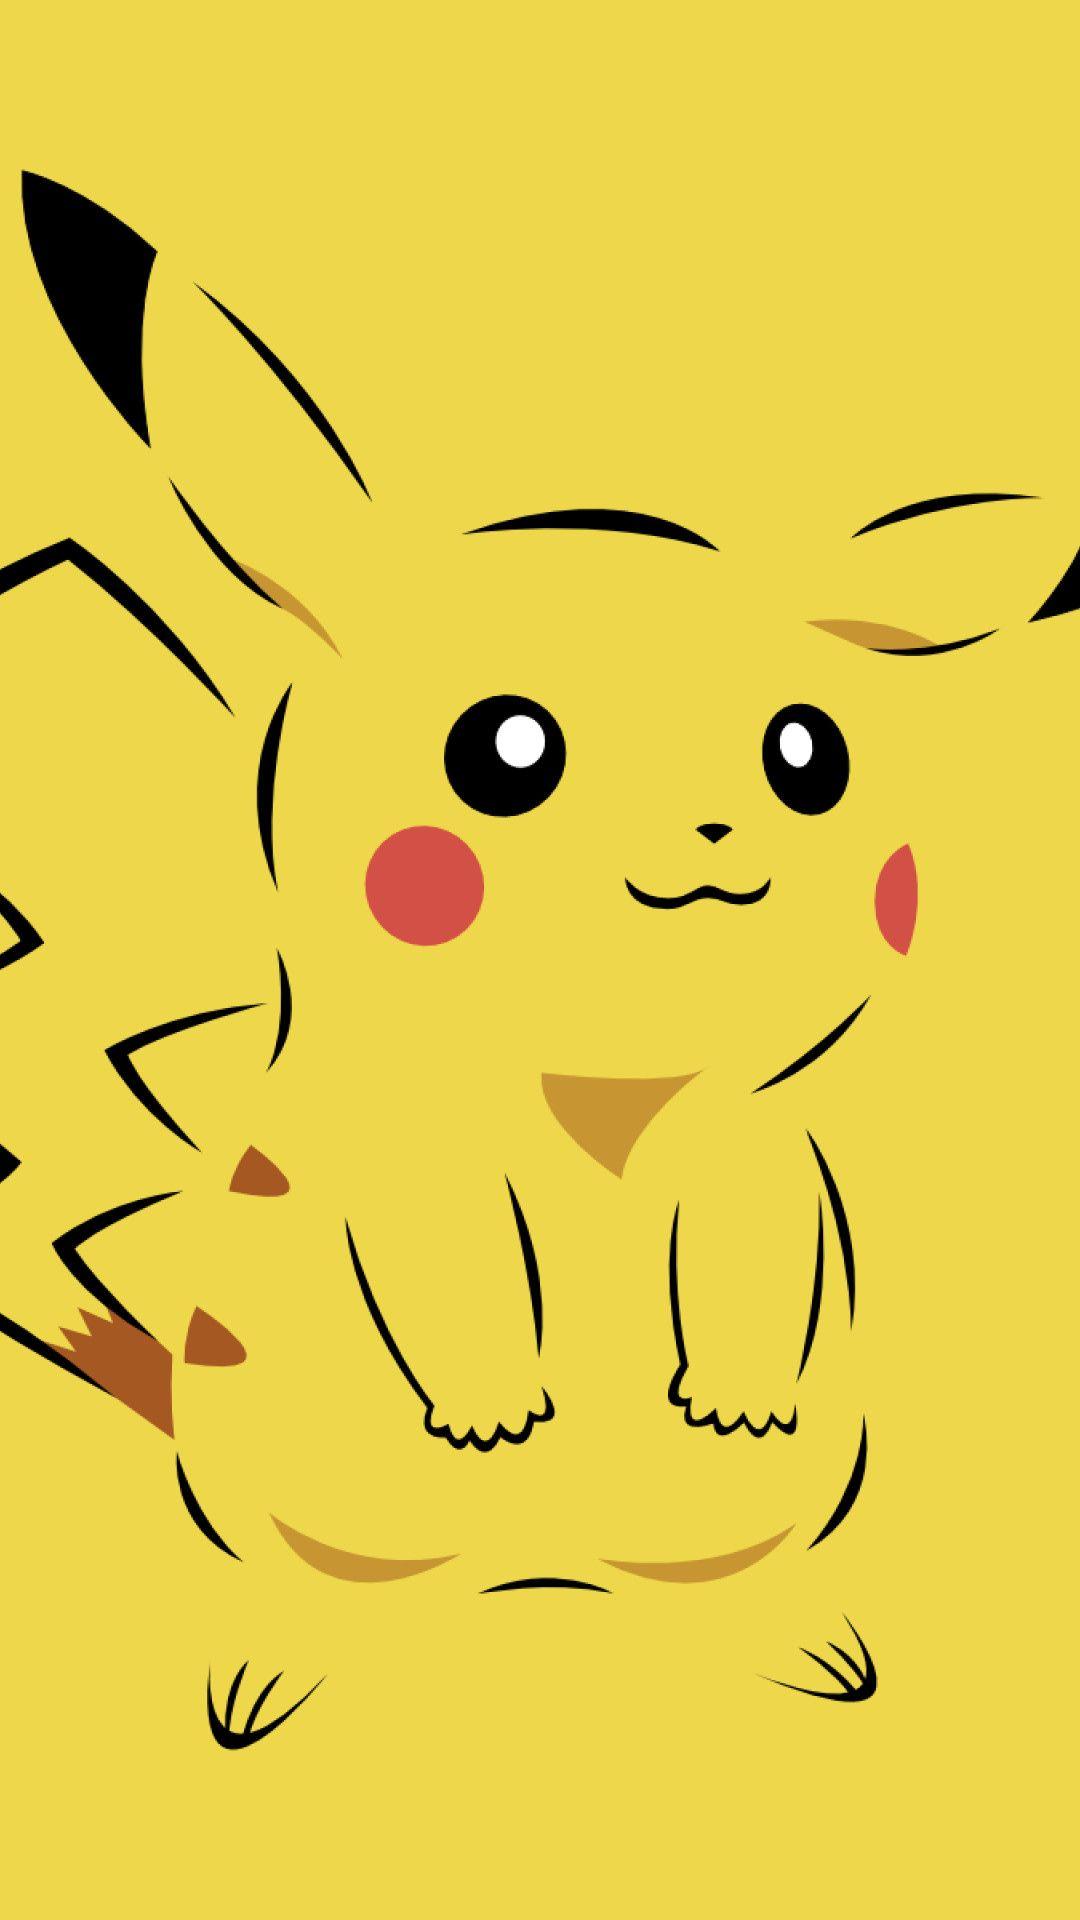 Best Free Pokemon iPhone Wallpaper. Pikachu wallpaper